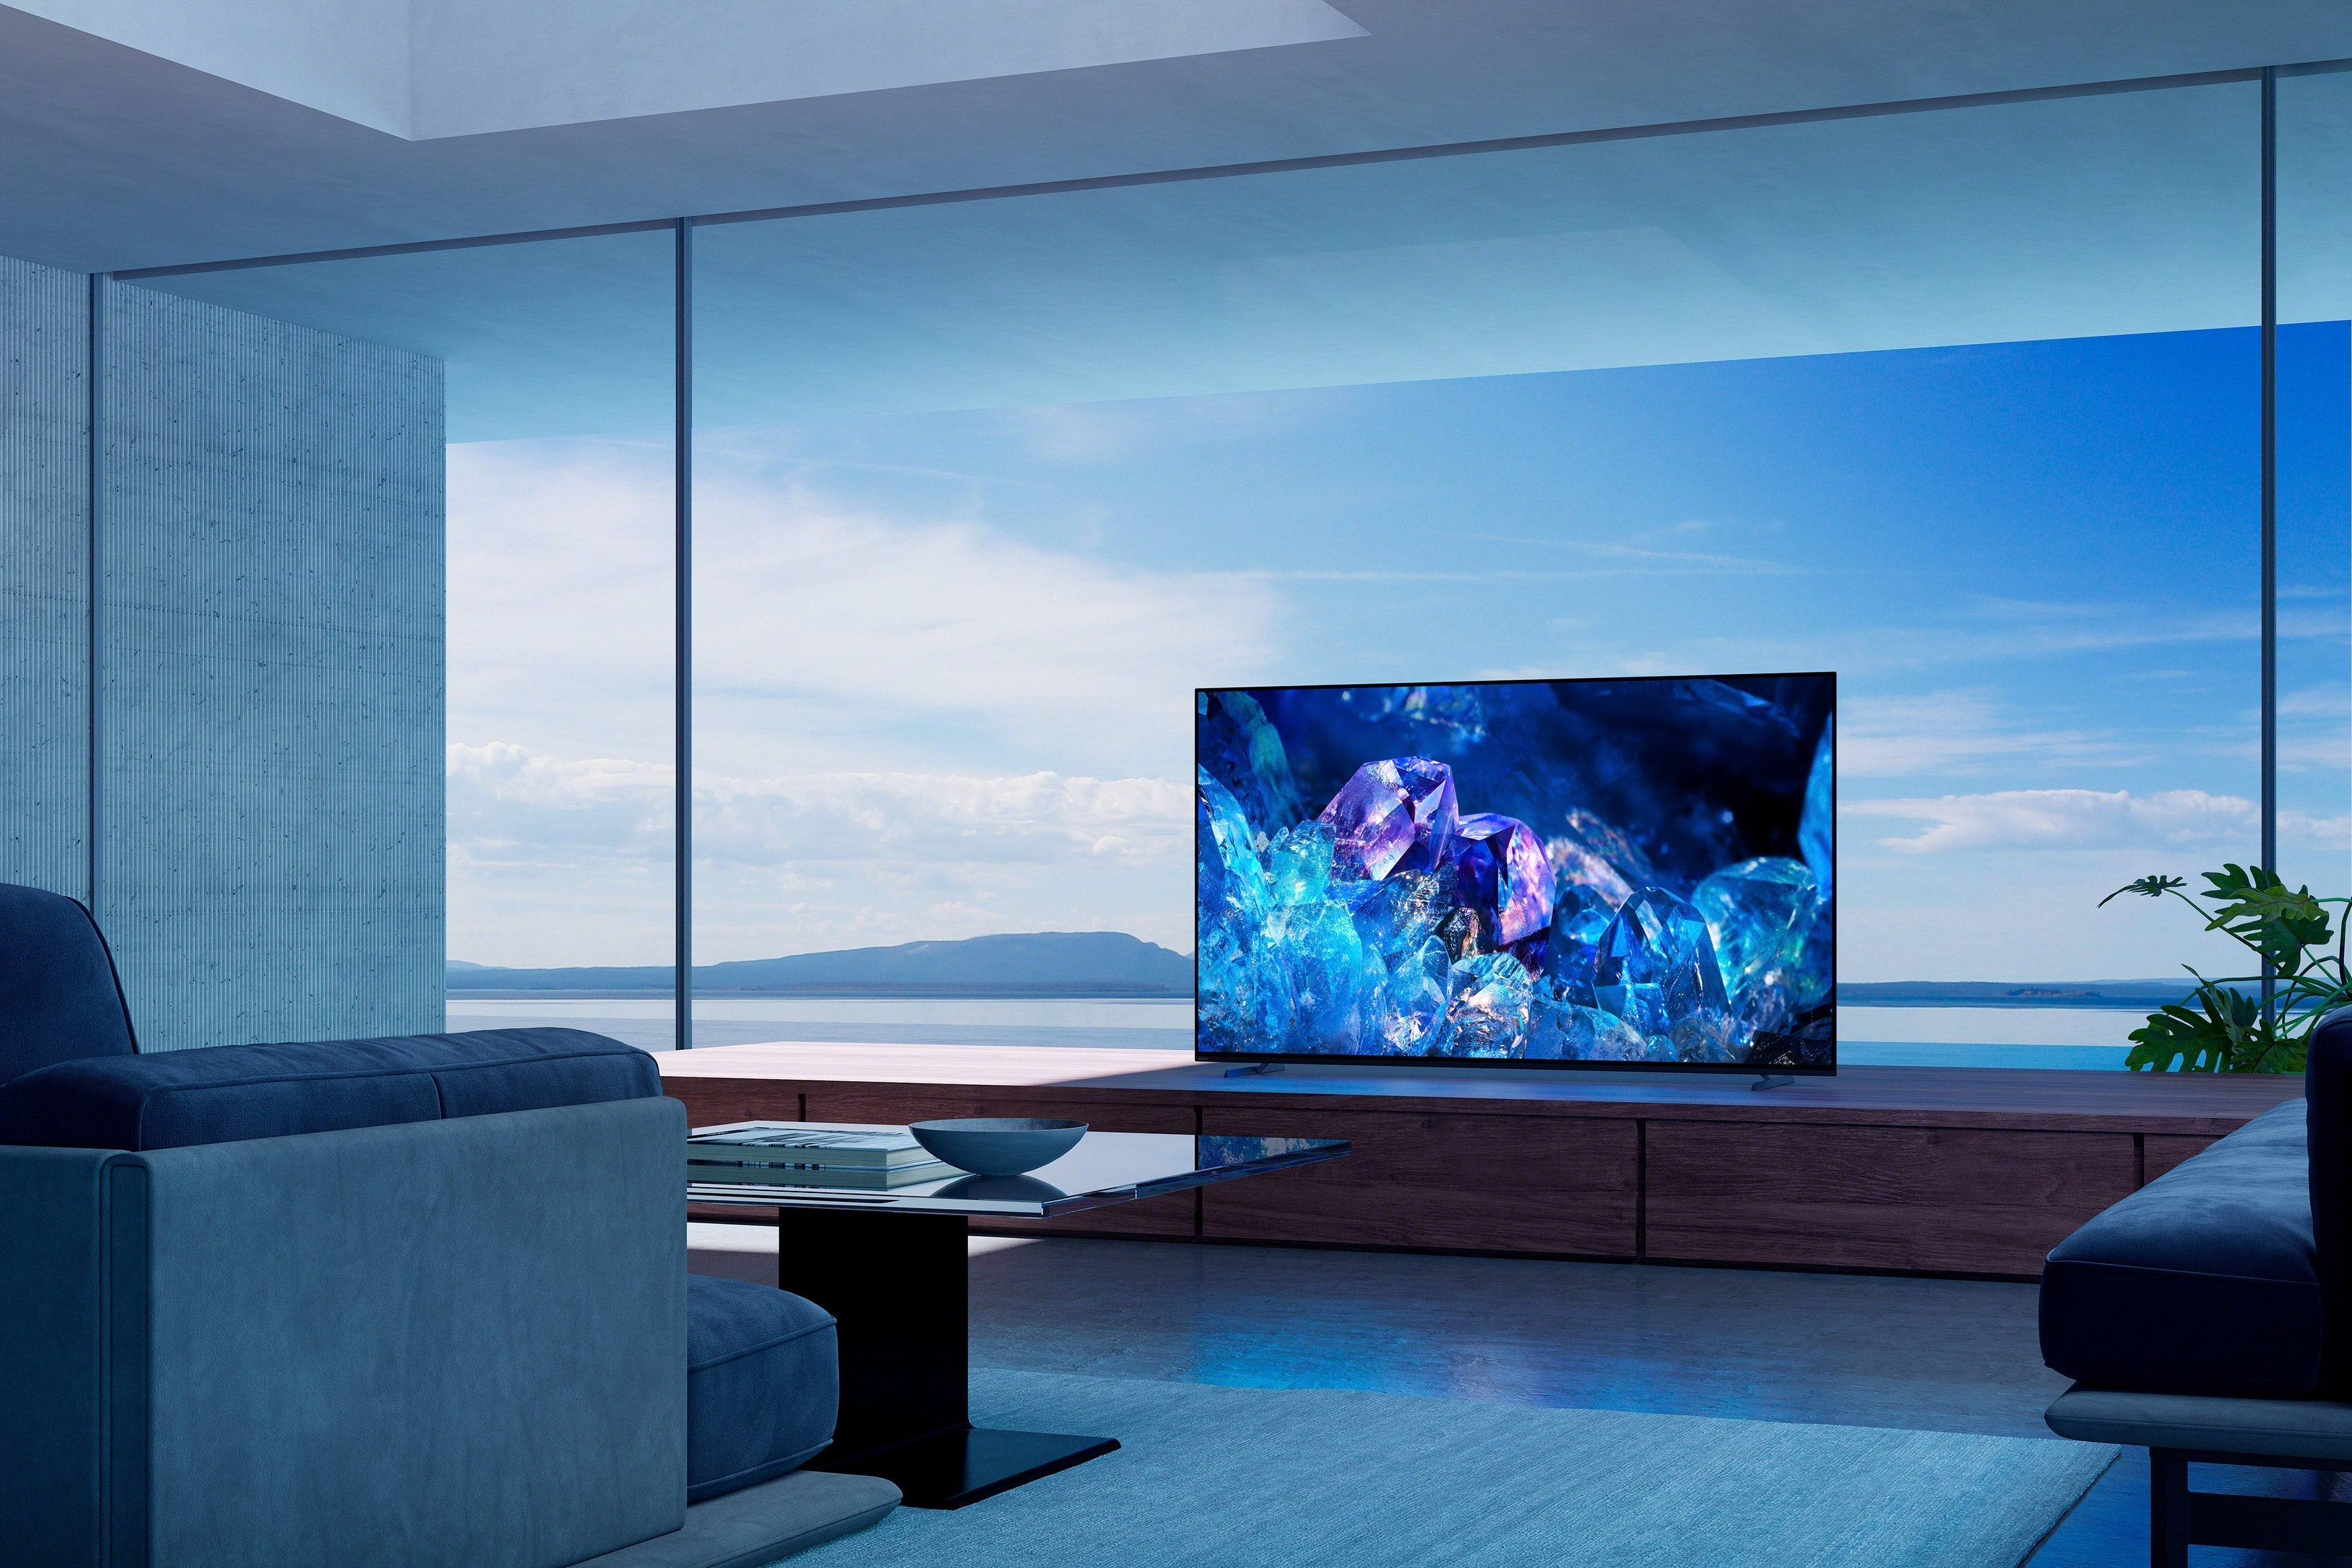 A80K BRAVIA XR | OLED | 4K Ultra HD | High Dynamic Range (HDR) | Smart TV (Google TV)